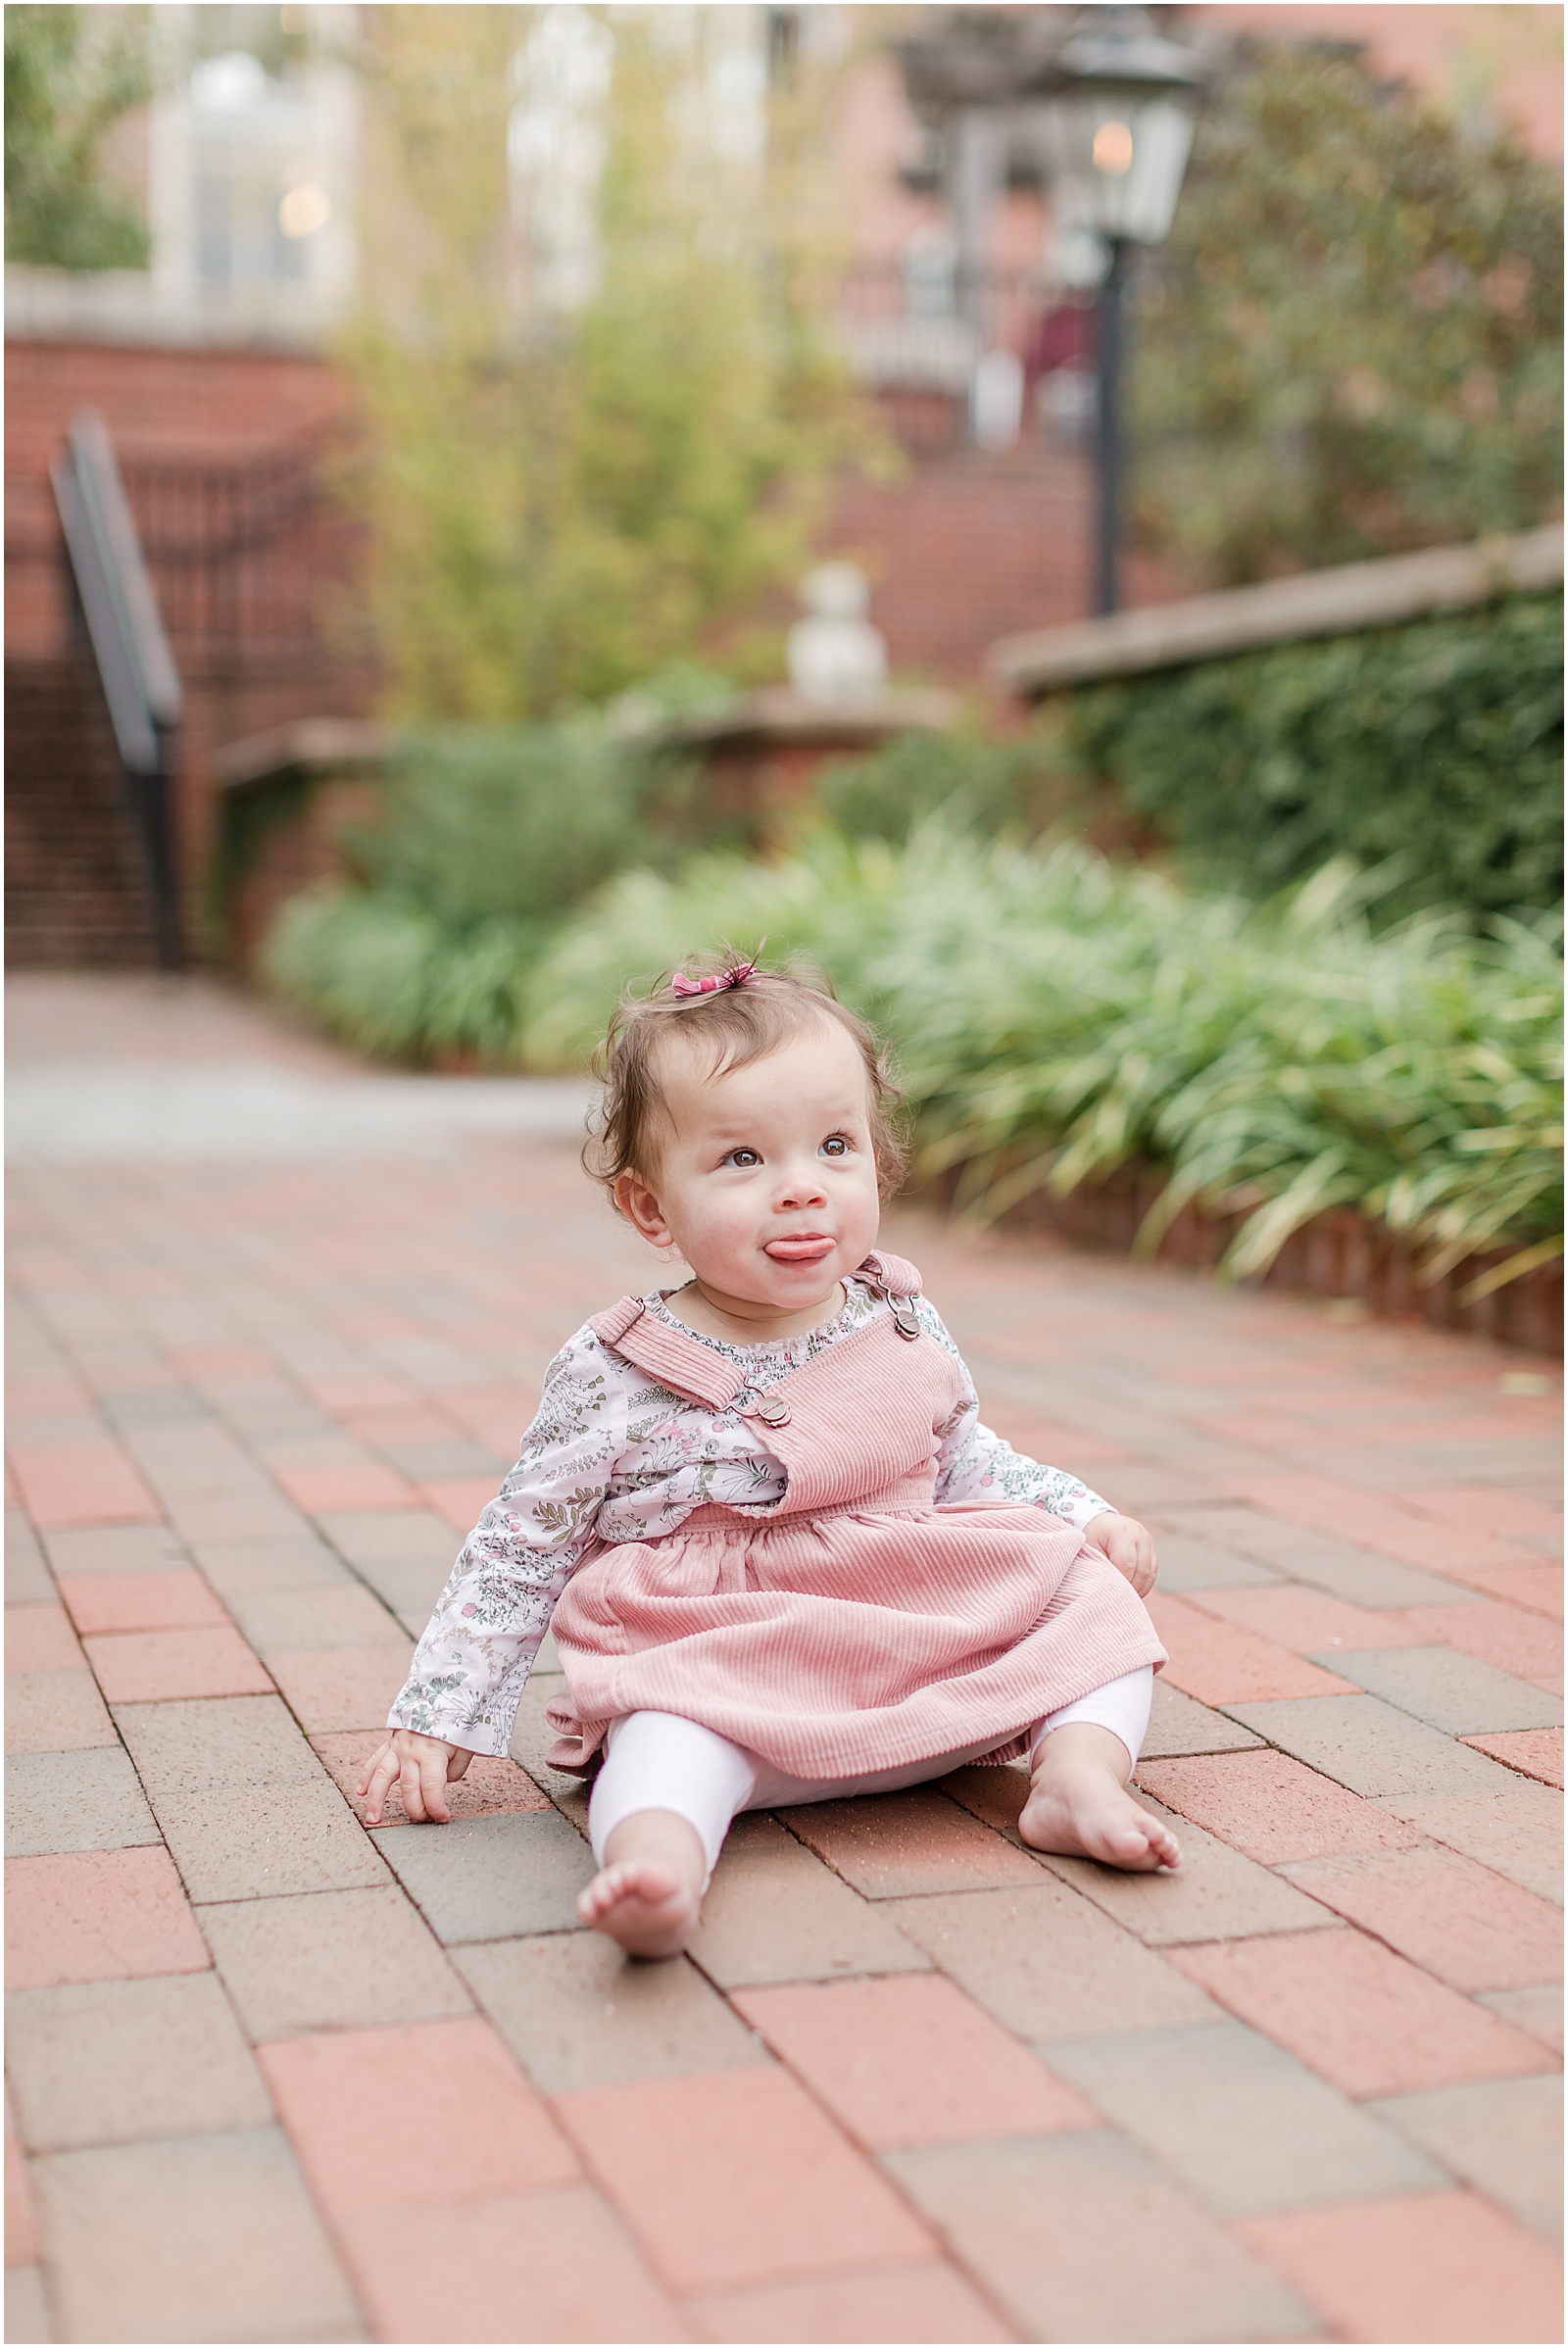 One year old girl sitting on brick pathway in Alpharetta